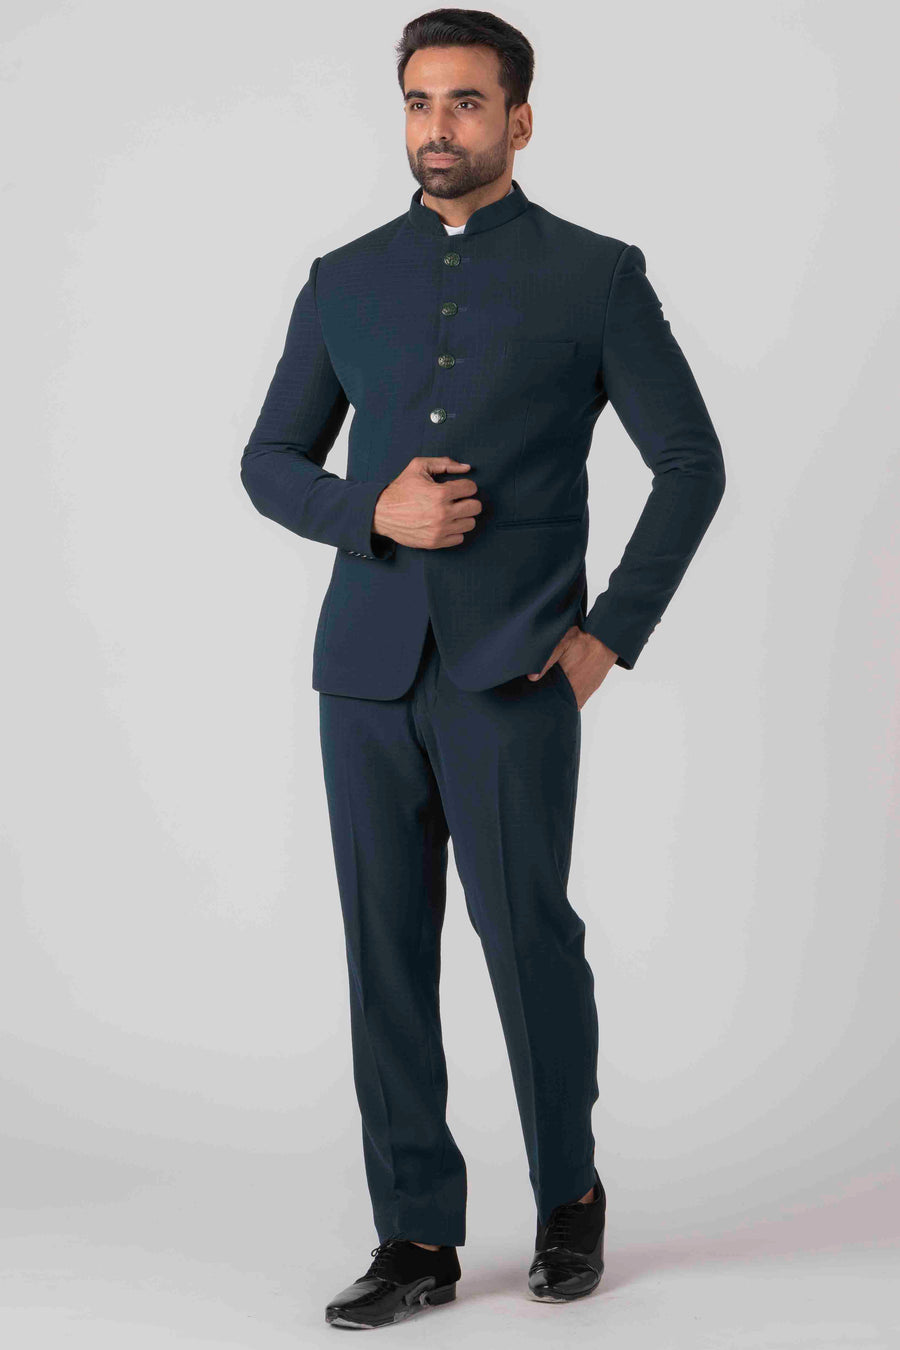 Buy Green Mirror Jodhpuri Suit : 237380 -